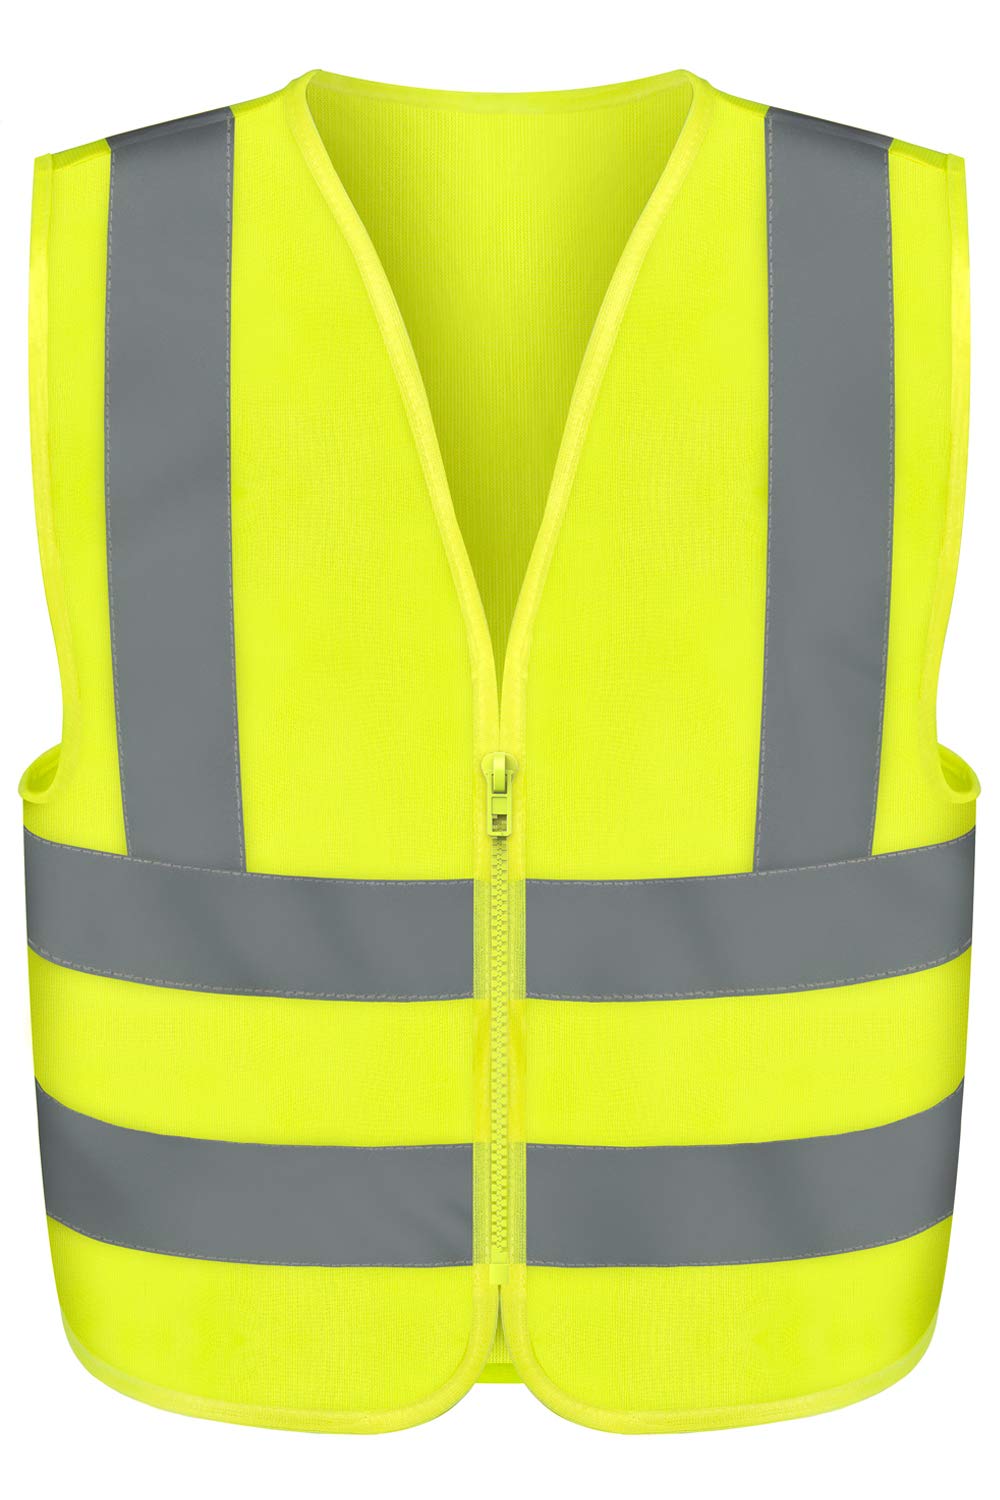 Neiko High Visibility Safety Vest for Men